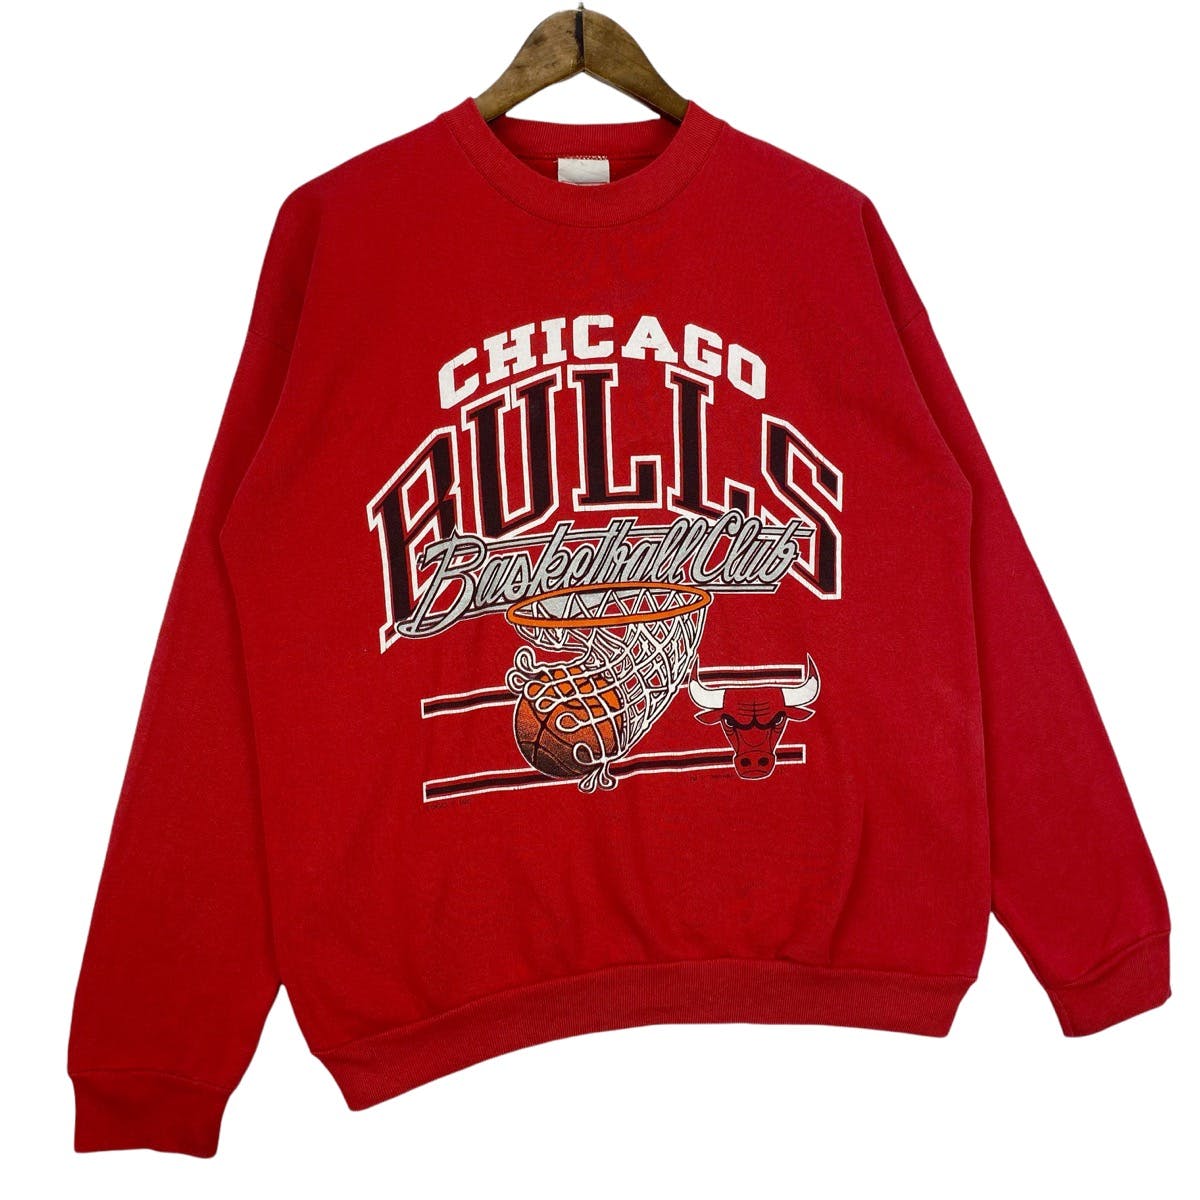 Vintage 1990 Chicago Bulls Basketball Club Sweatshirt - 3